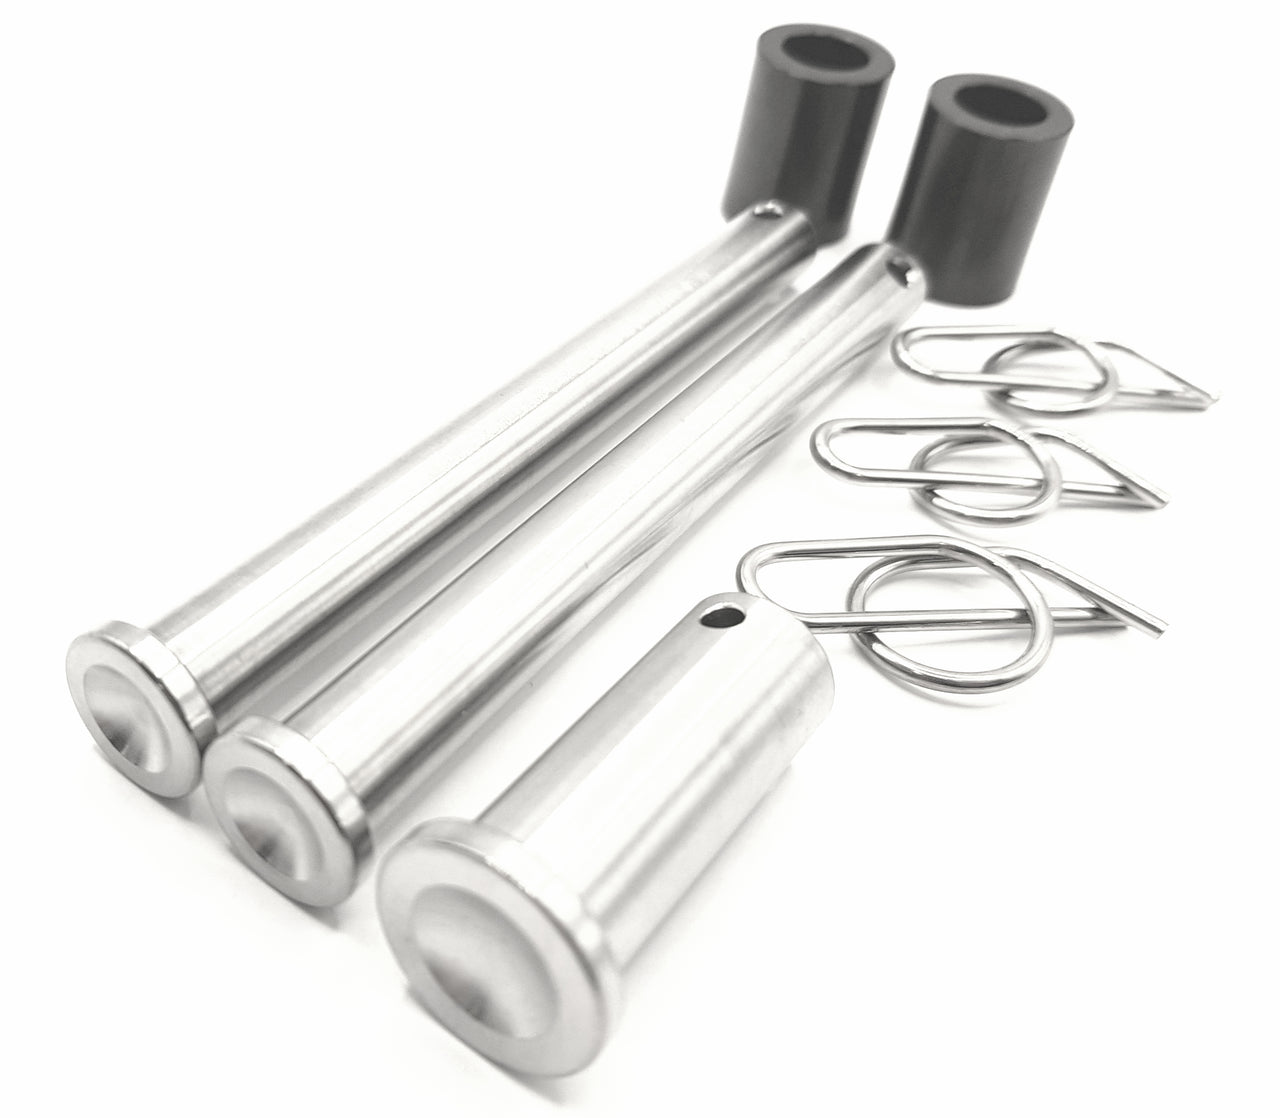 Triple X Jacobs Ladder Pin Kit With 1/2 Pin